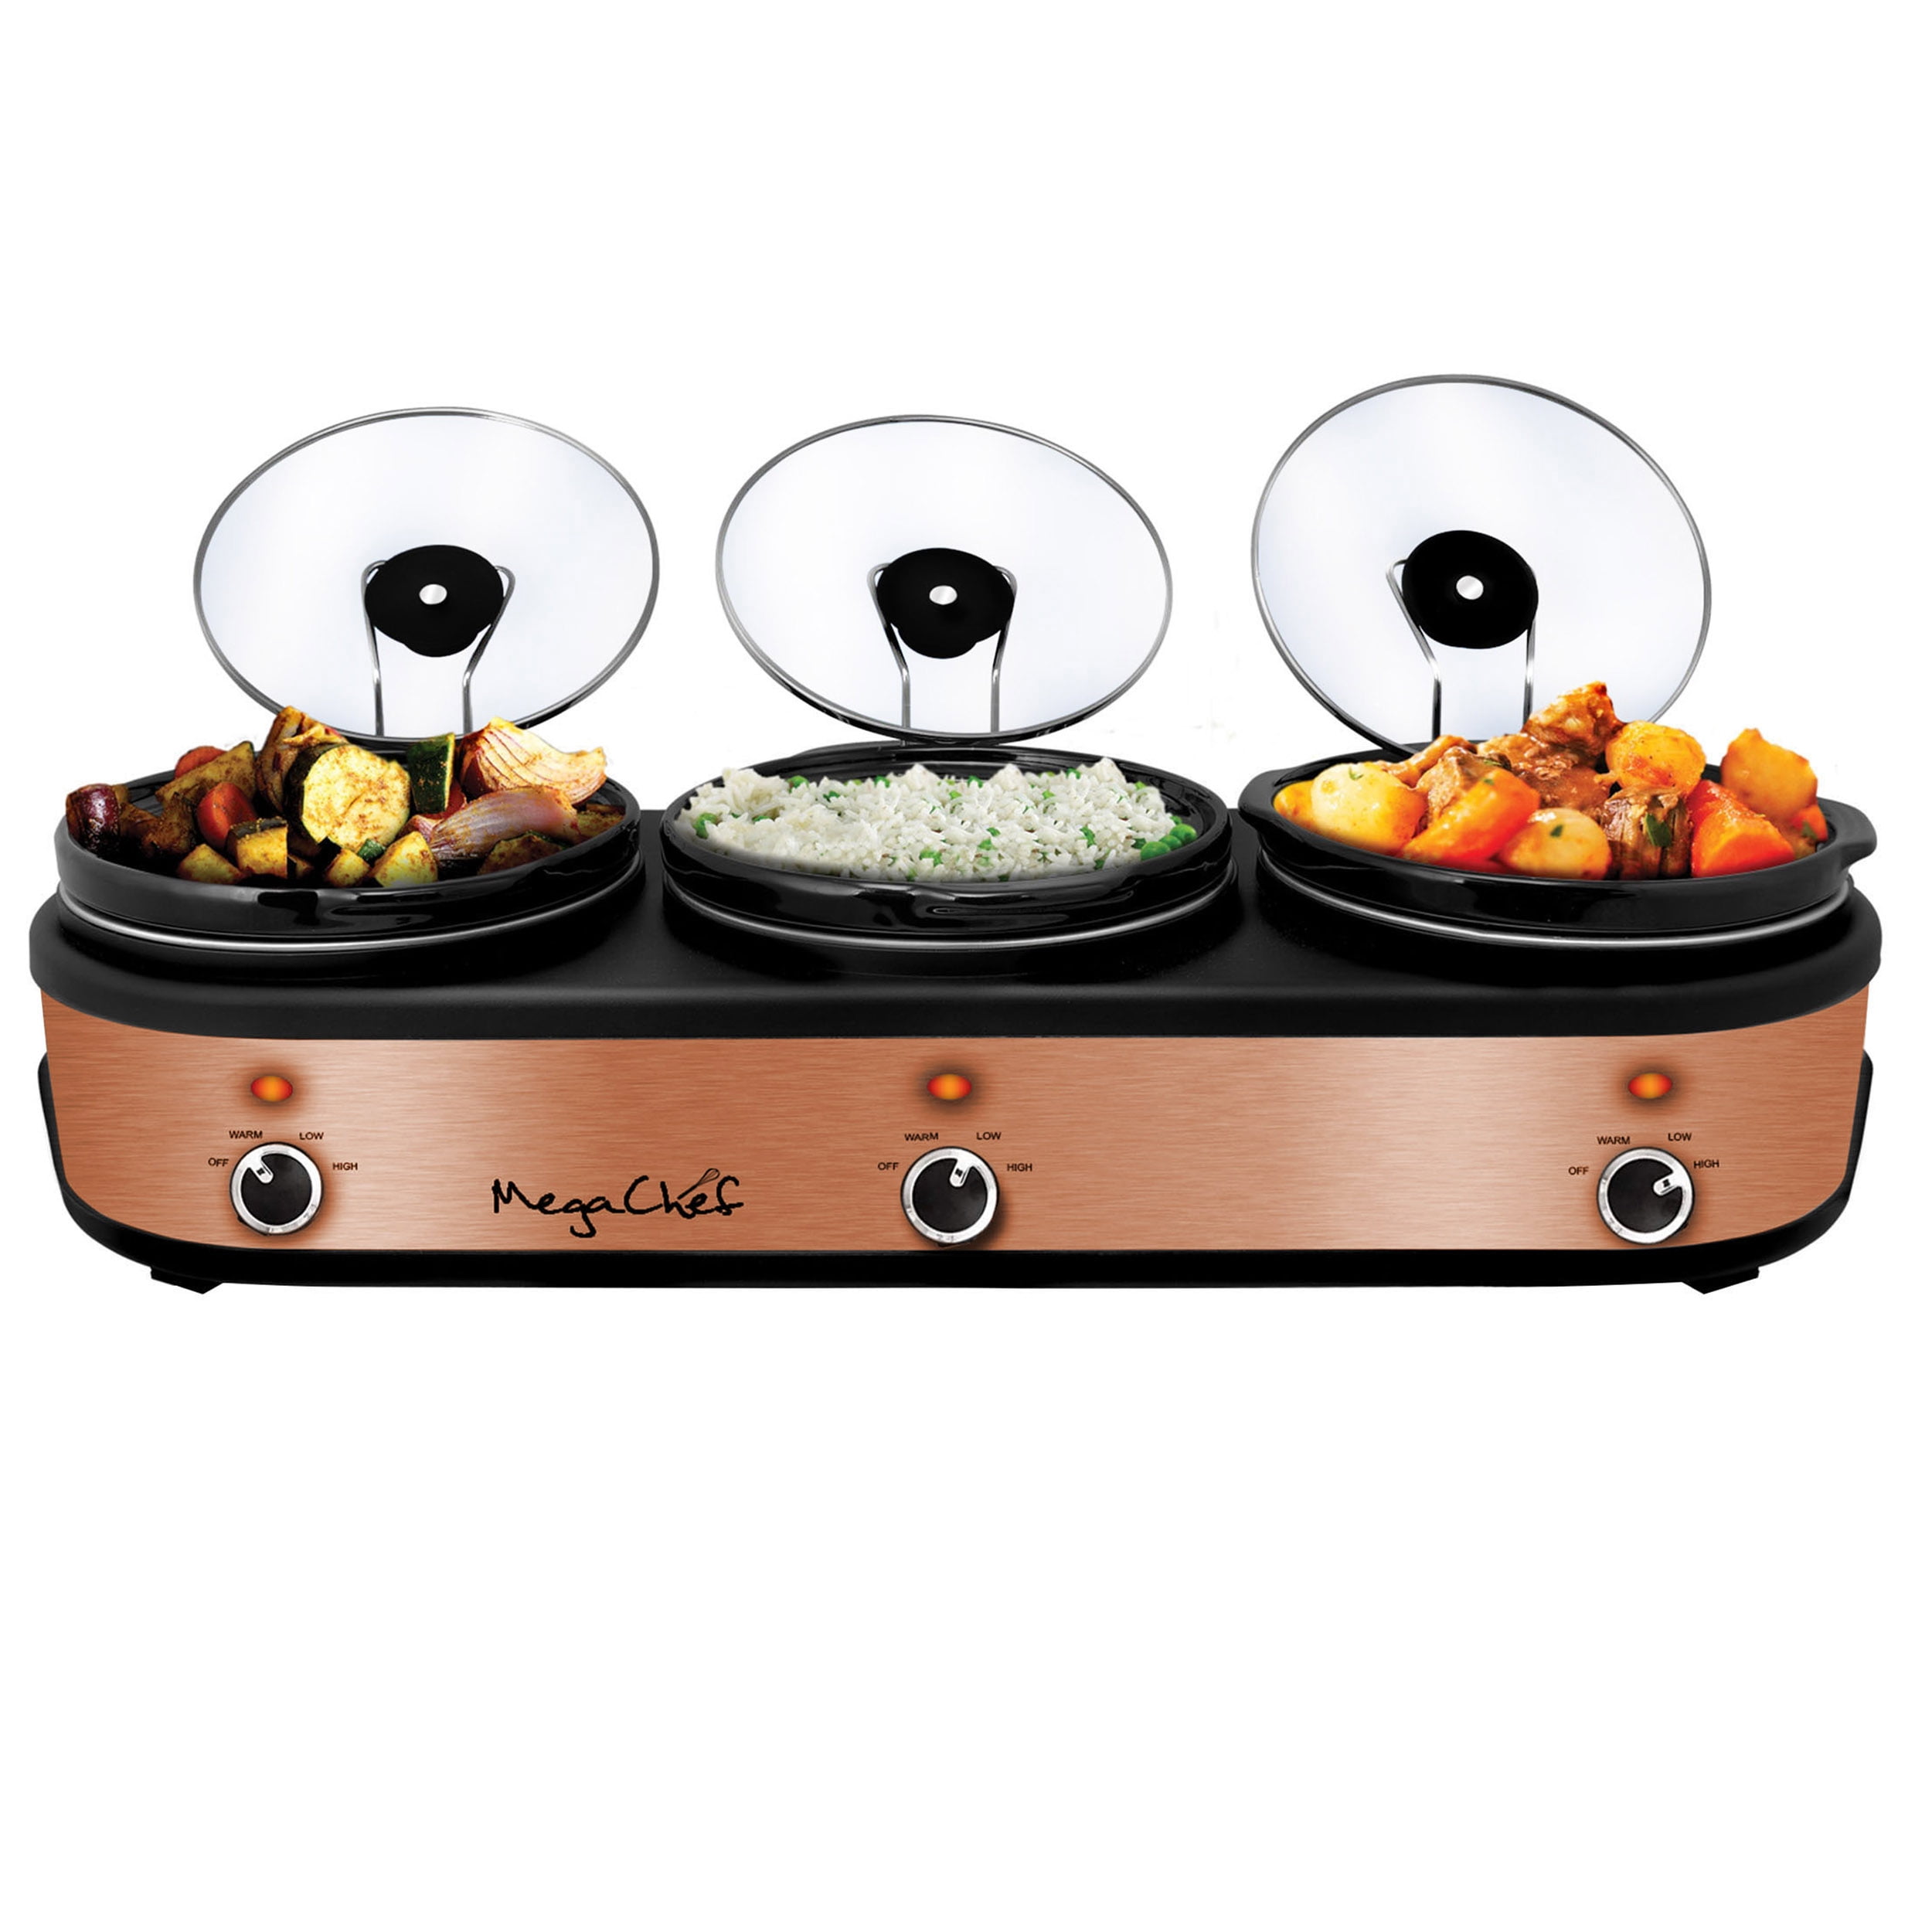 NutriChef PKBFWM33 - Food Warming Tray / Buffet Server / Hot Plate